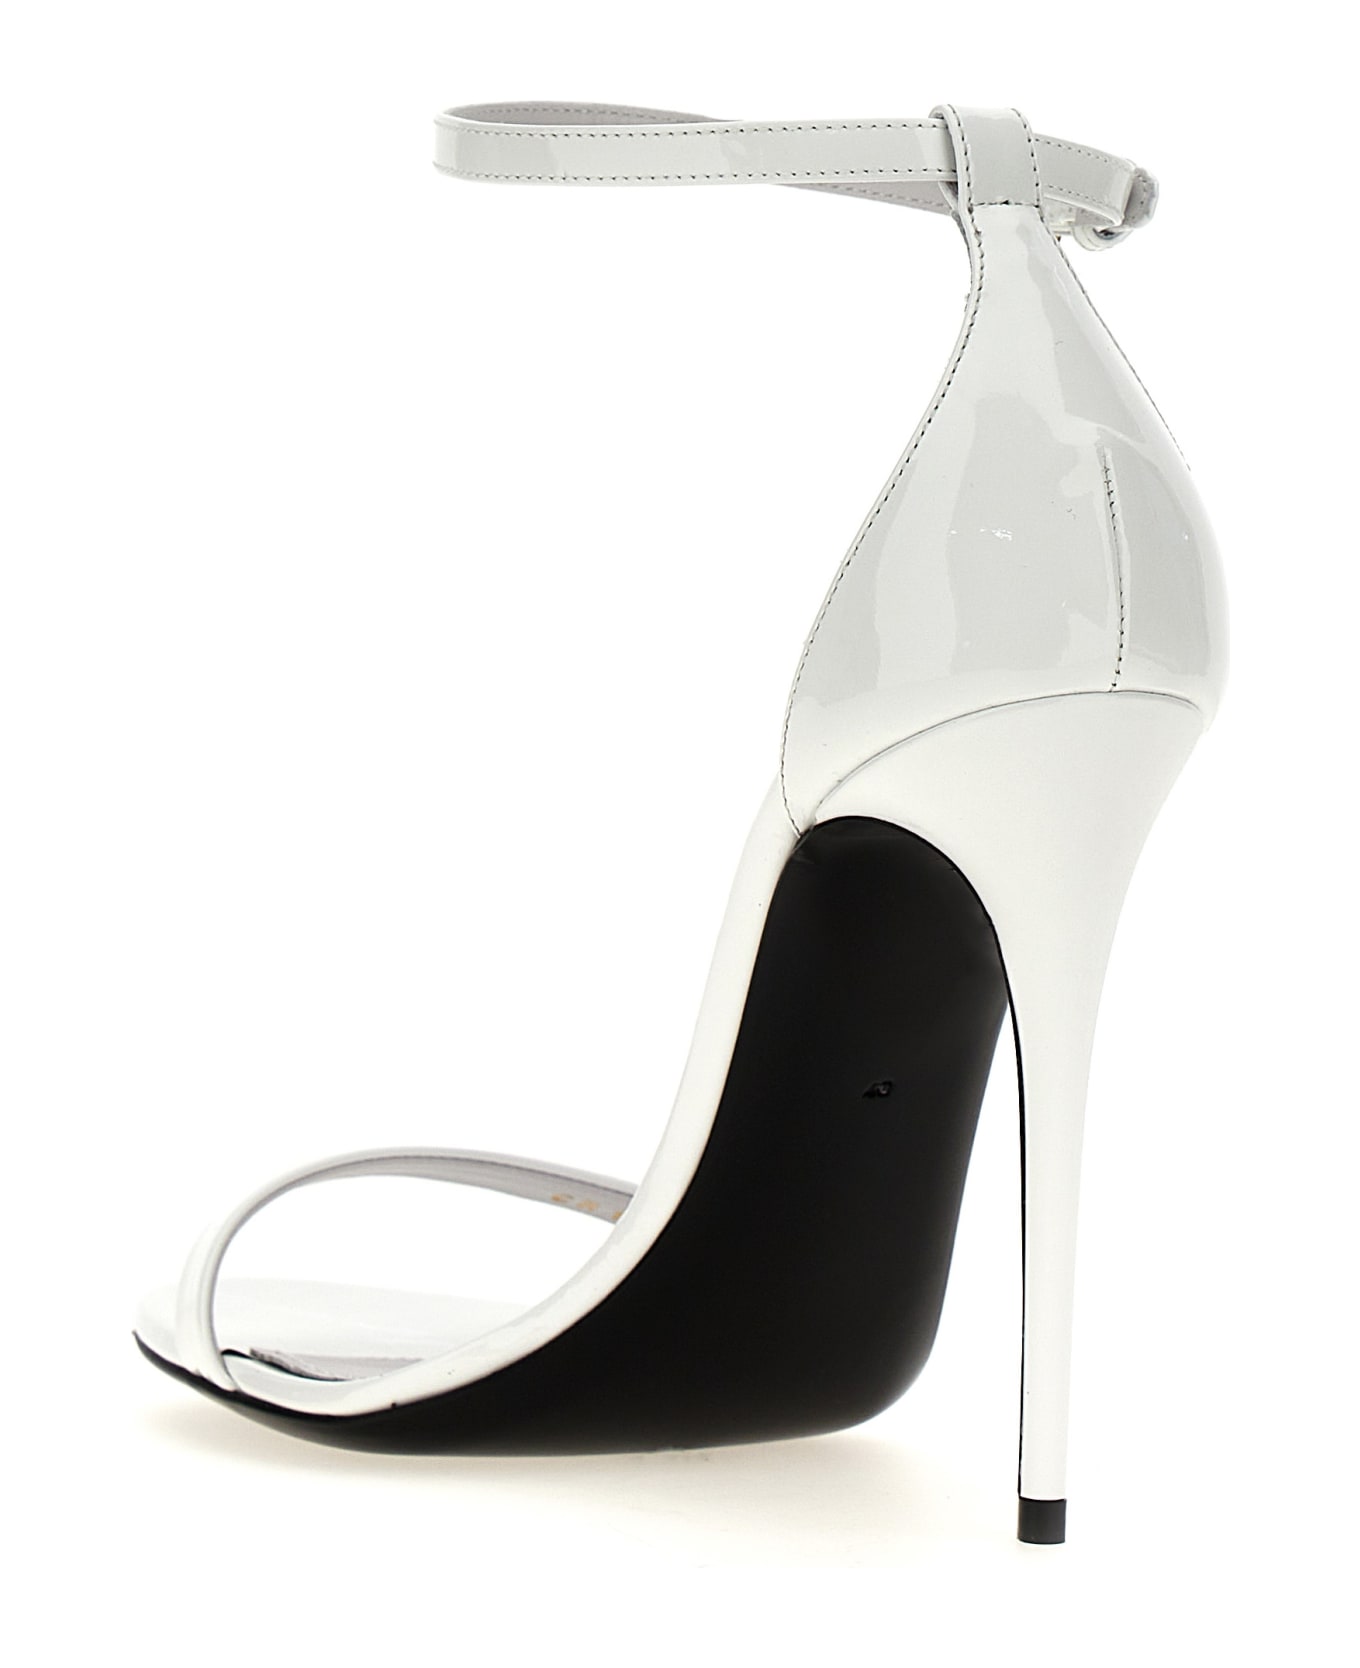 Dolce & Gabbana Patent Leather Sandals - White サンダル